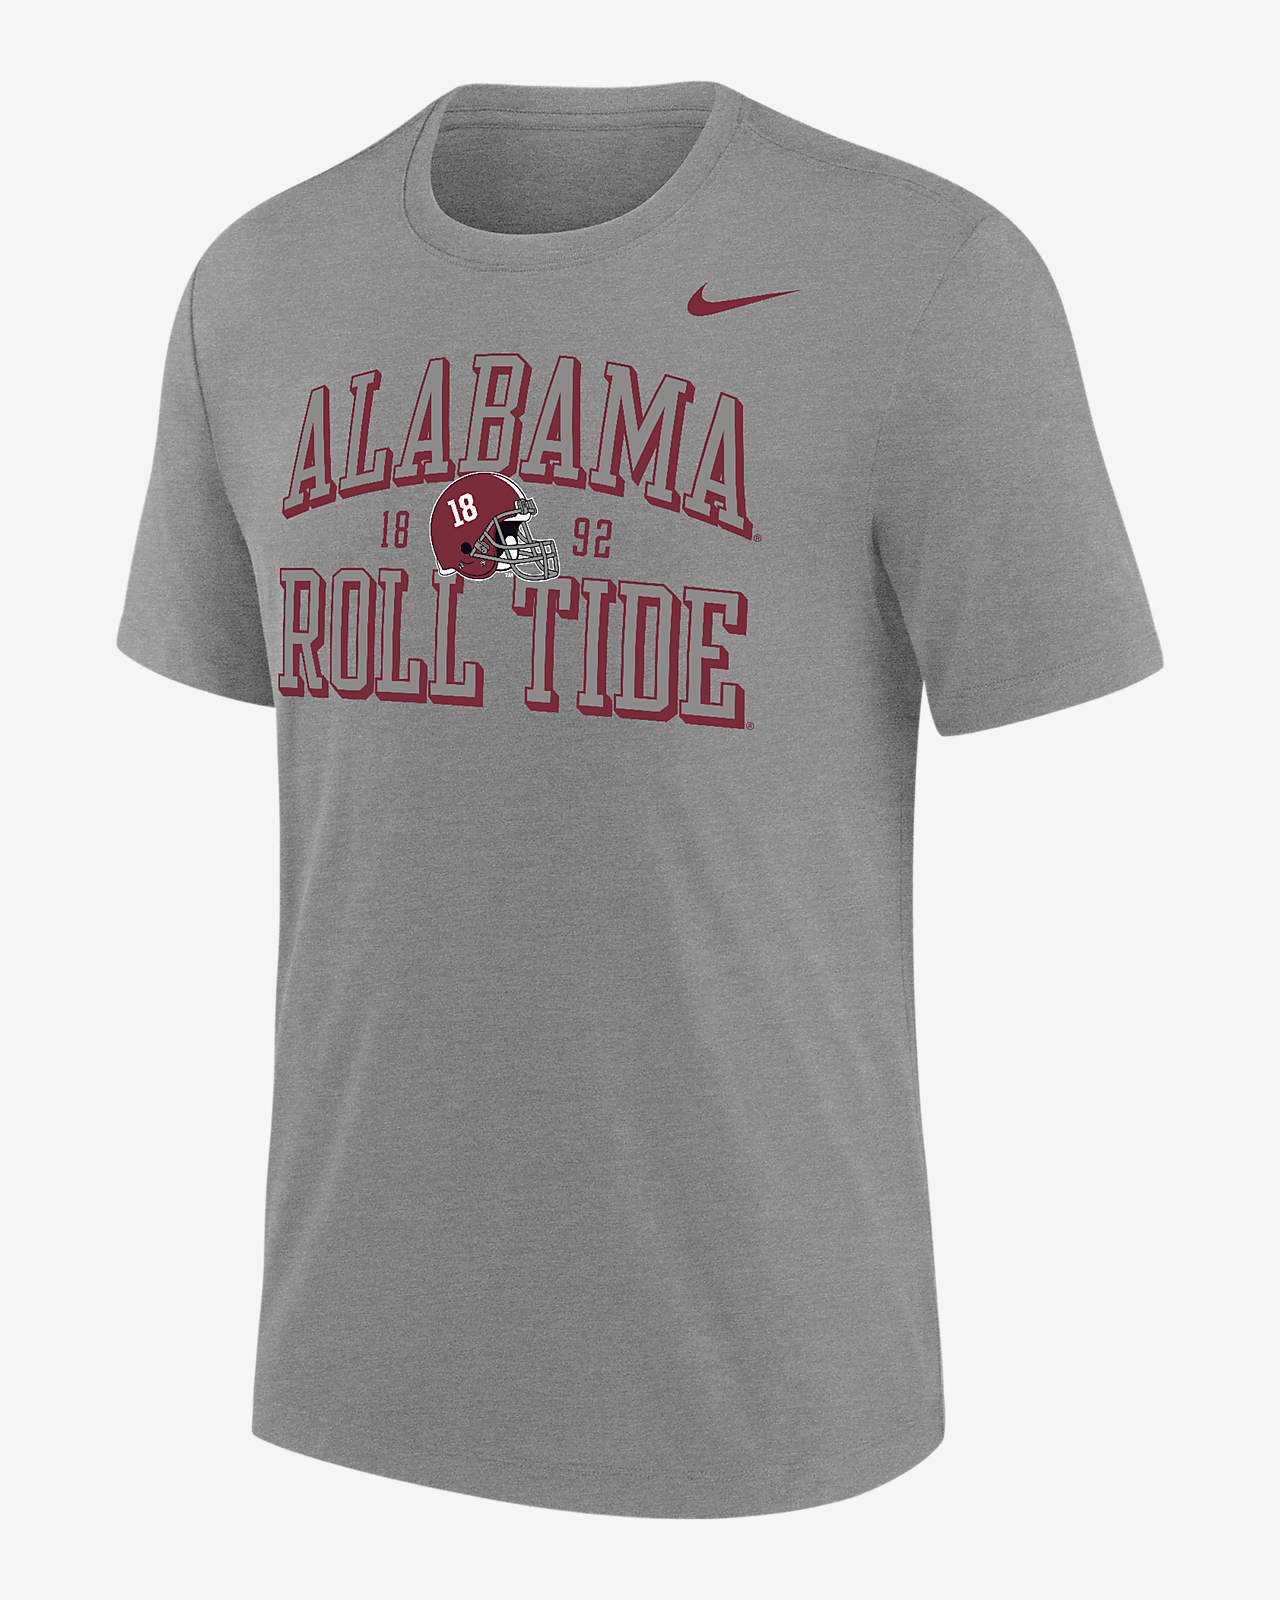 Playera universitaria Nike para hombre Alabama